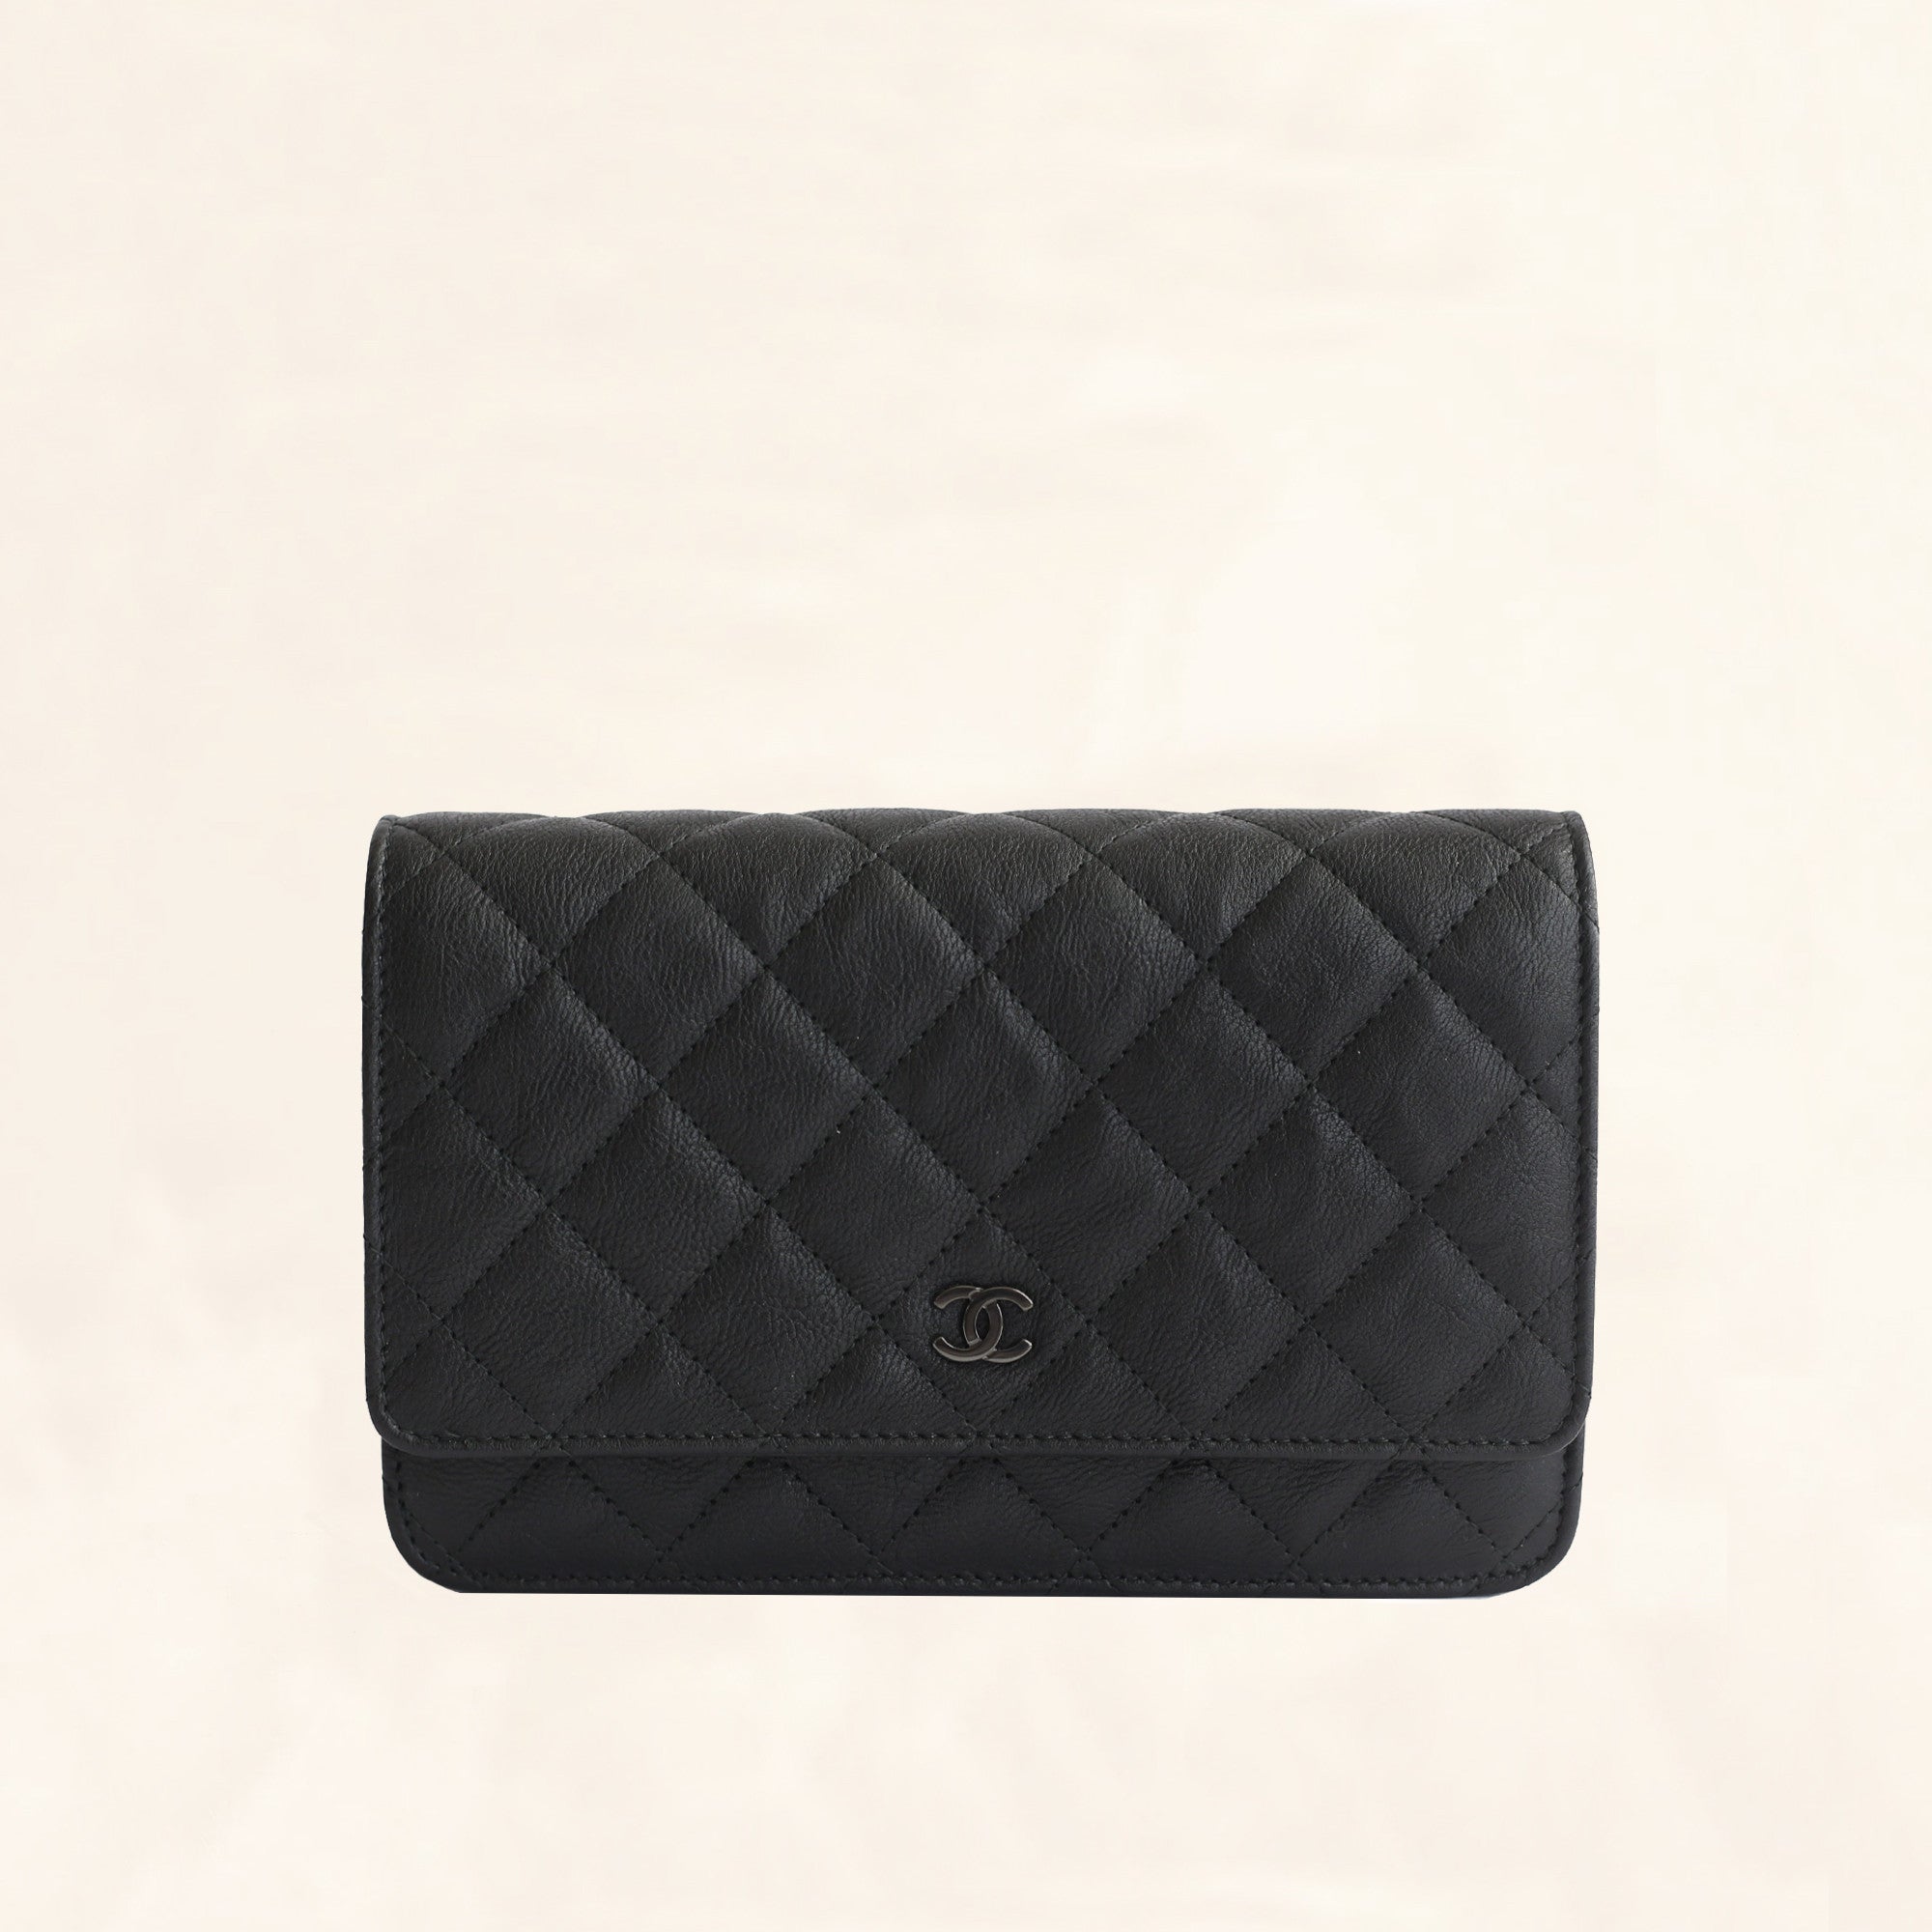 NIB 100AUTH CHANEL 22C Beige Clair Caviar Leather Classic Wallet On Chain  WOC  eBay